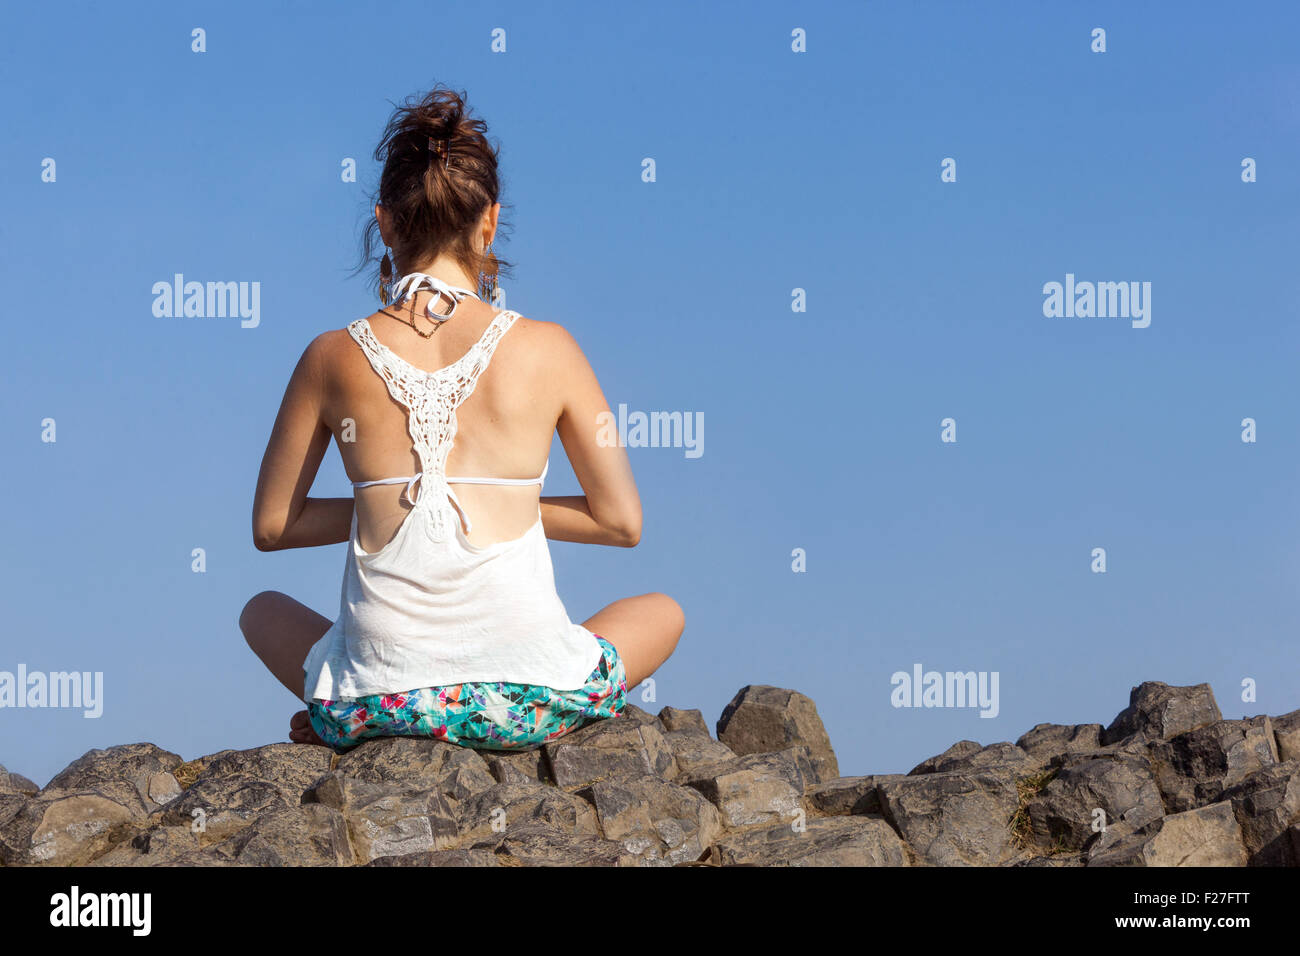 Woman yoga pose on volcanic rock Stock Photo